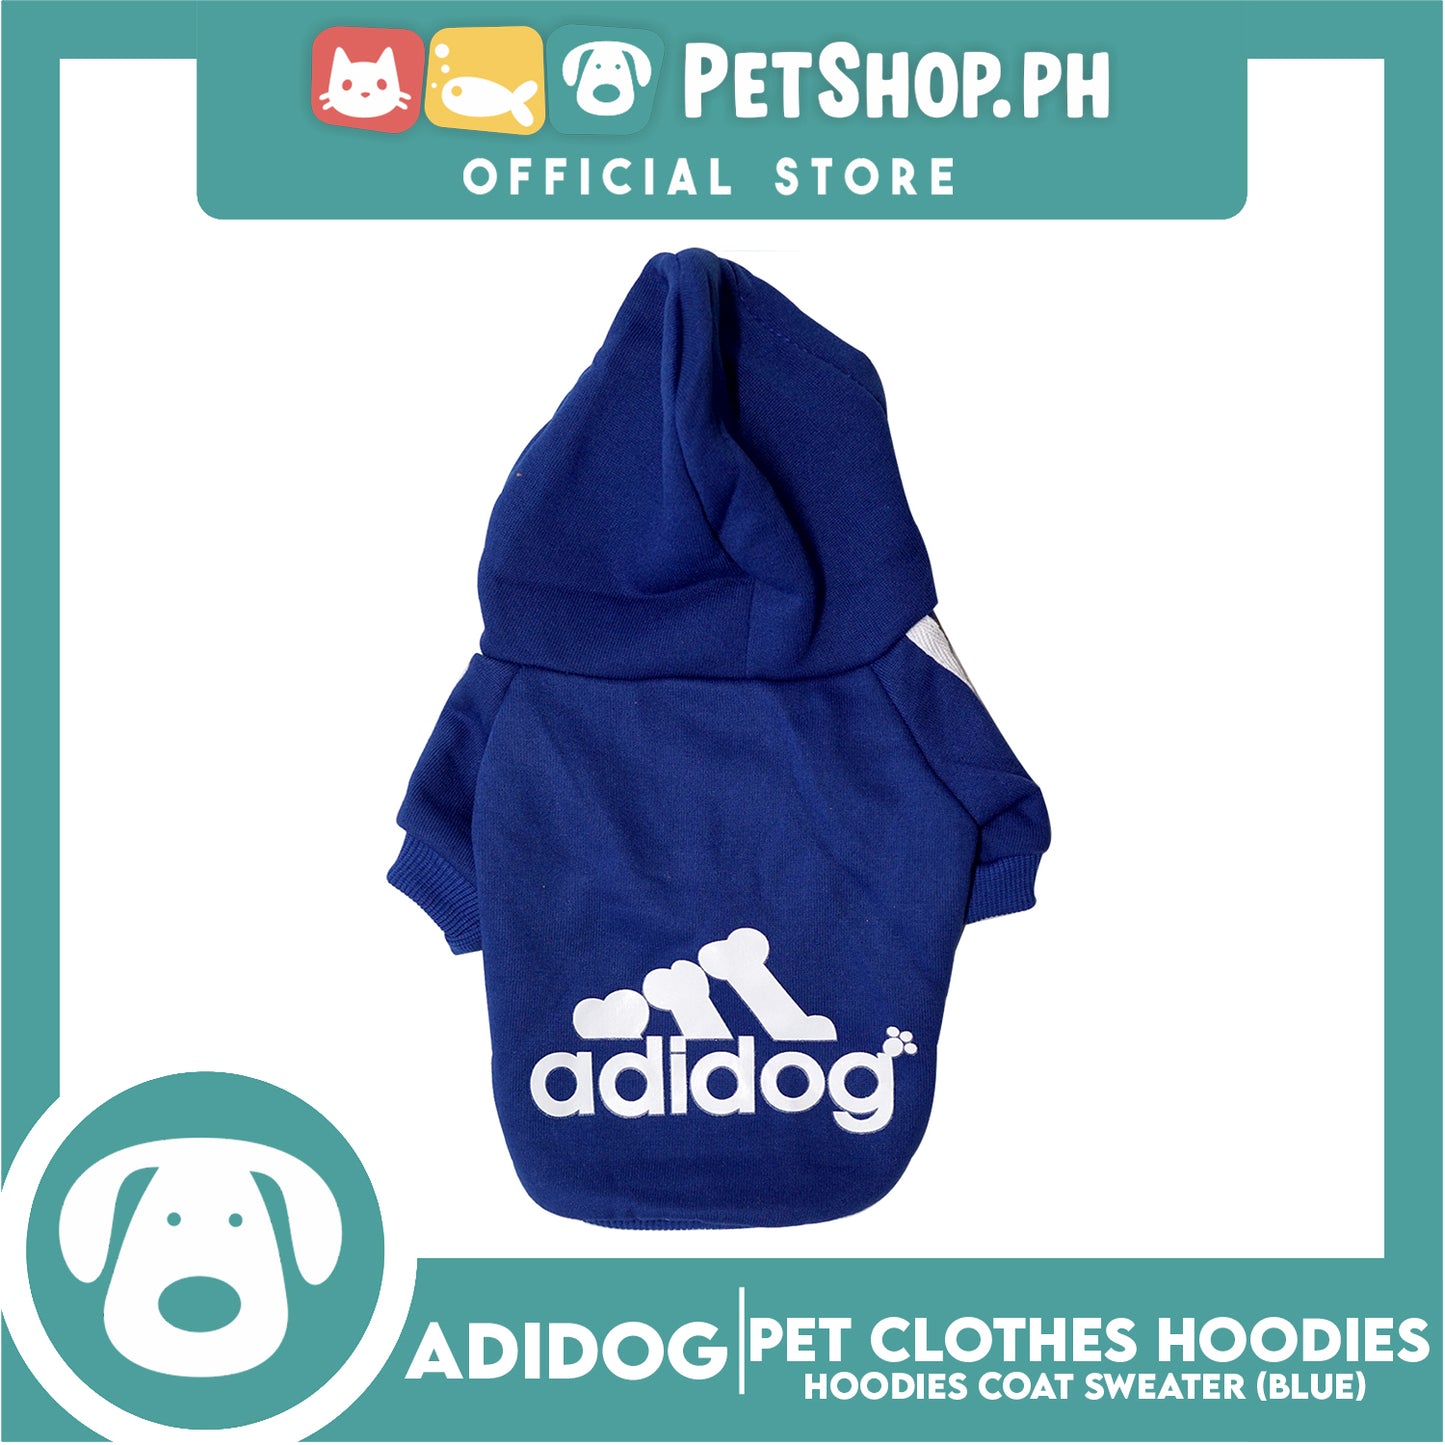 Adidog Pet Clothes Hoodies, Dog Winter Hoodies Apparel Puppy Cute Warm Hoodies Coat Sweater (Blue) (Medium)